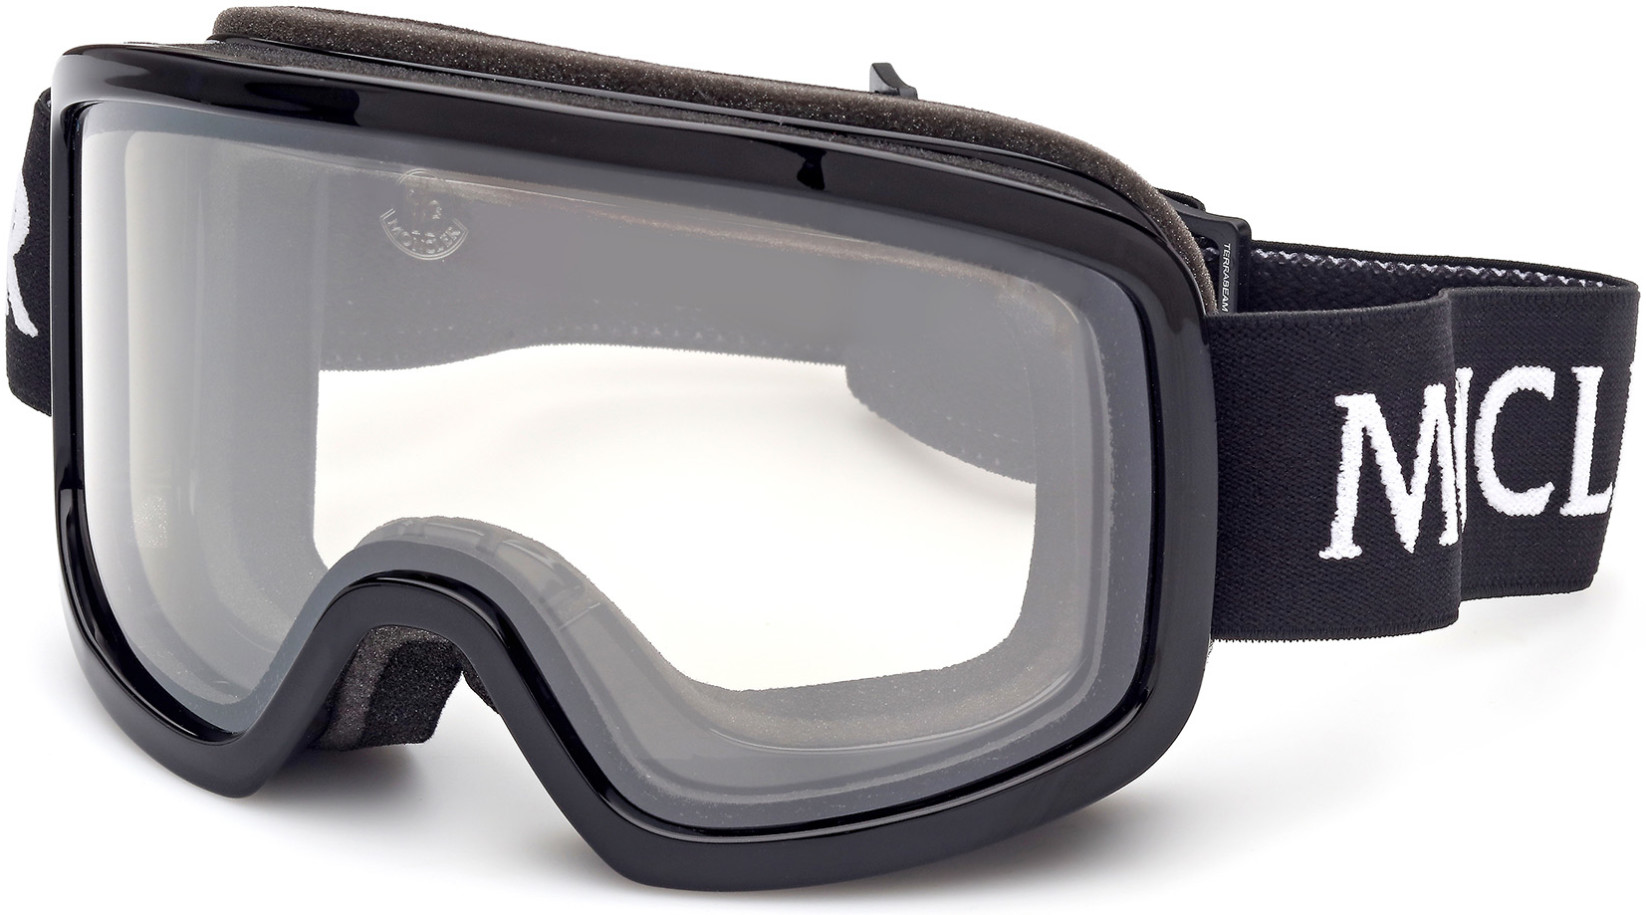 Moncler Terrabeam Ski Goggles - Black